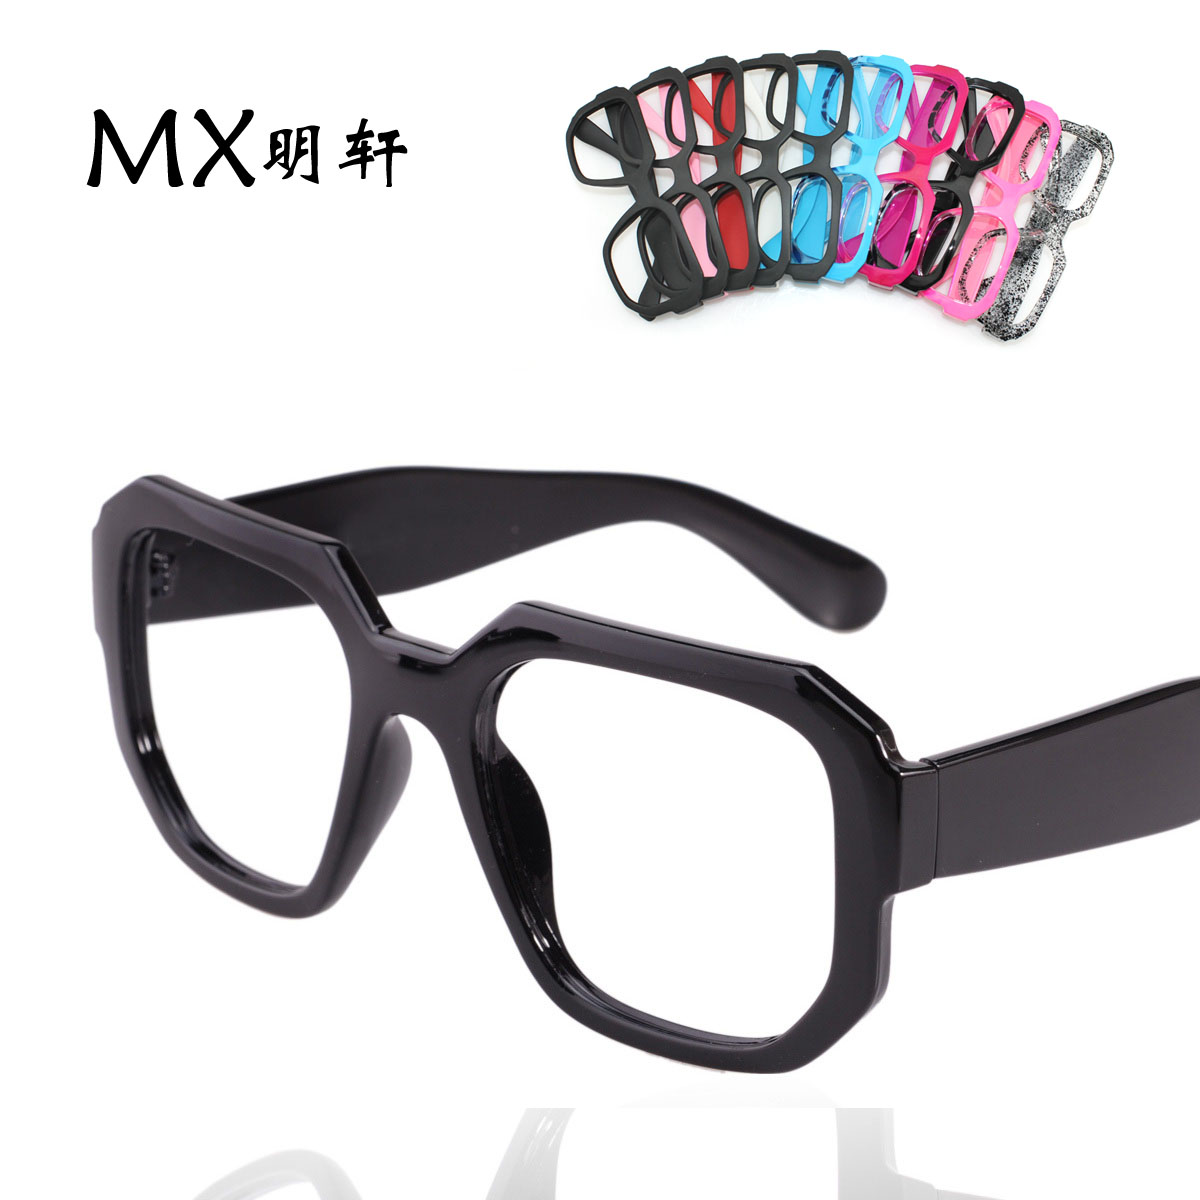 Free shipping, Non-mainstream vintage glasses frames fashion elegant box myopia eyeglasses frame ,02